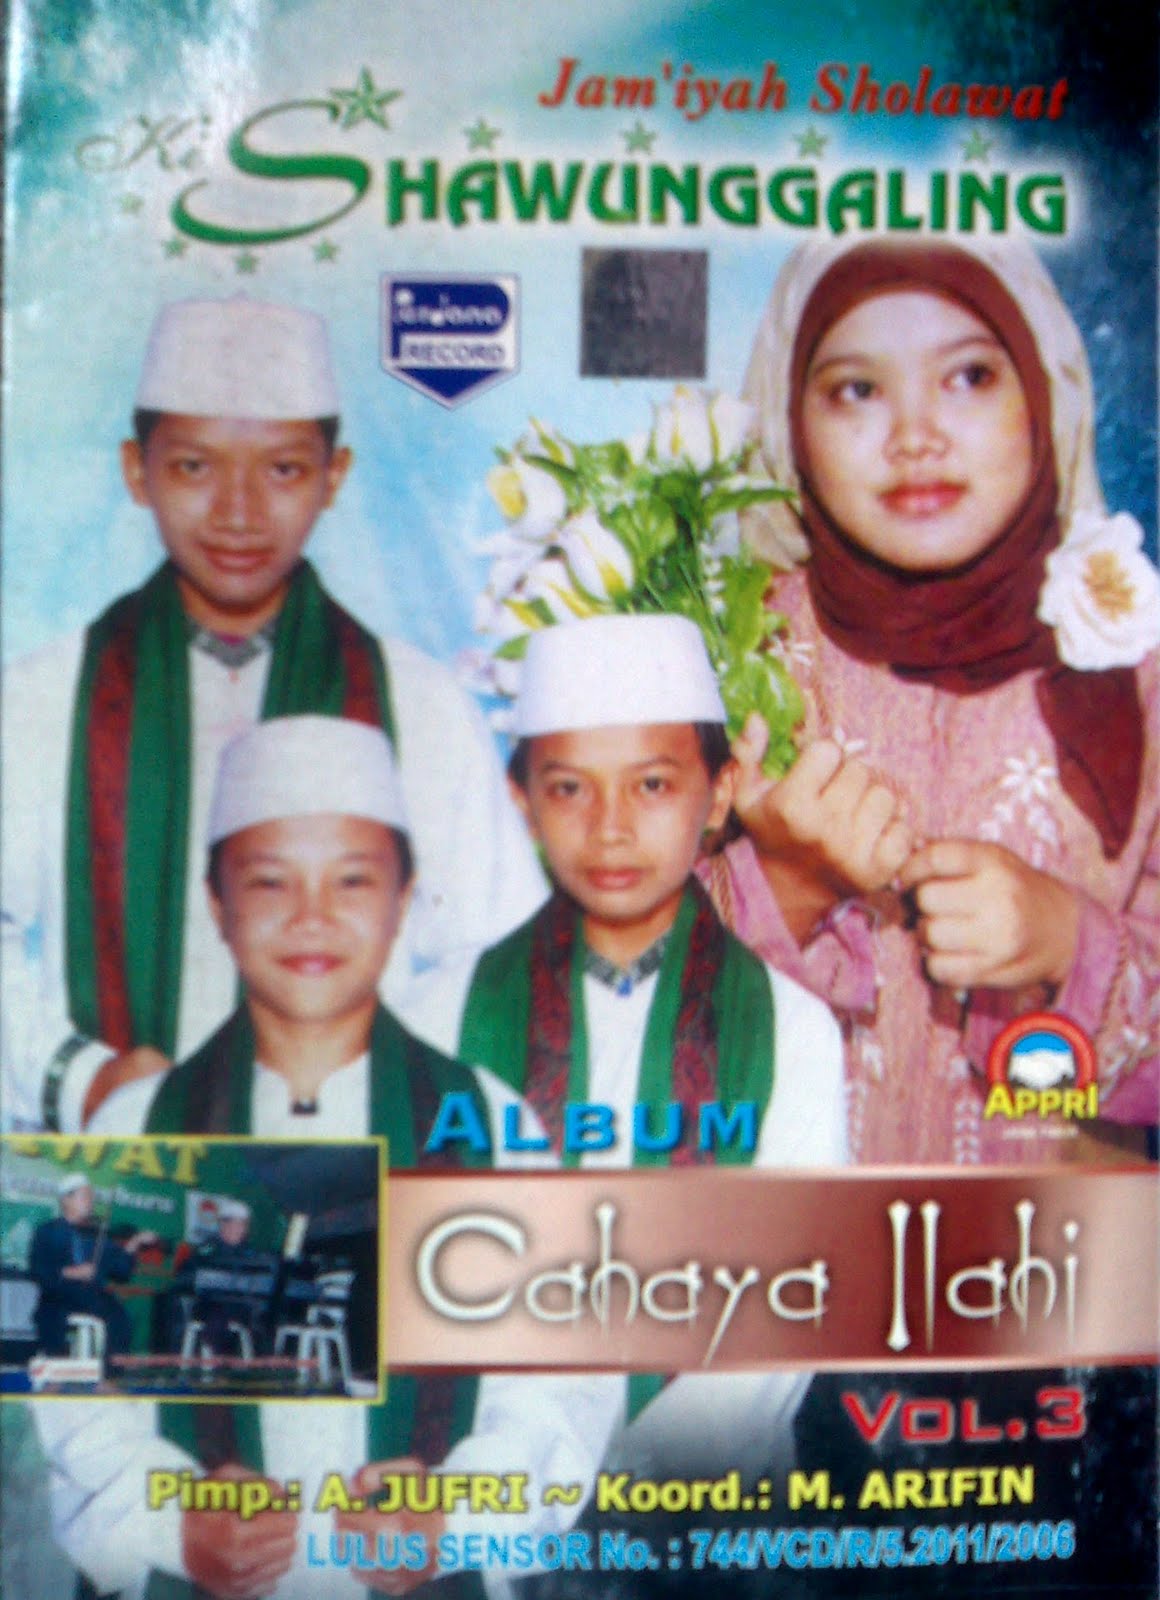 Album Sholawat Cahaya Ilahi Ki Shawunggaling